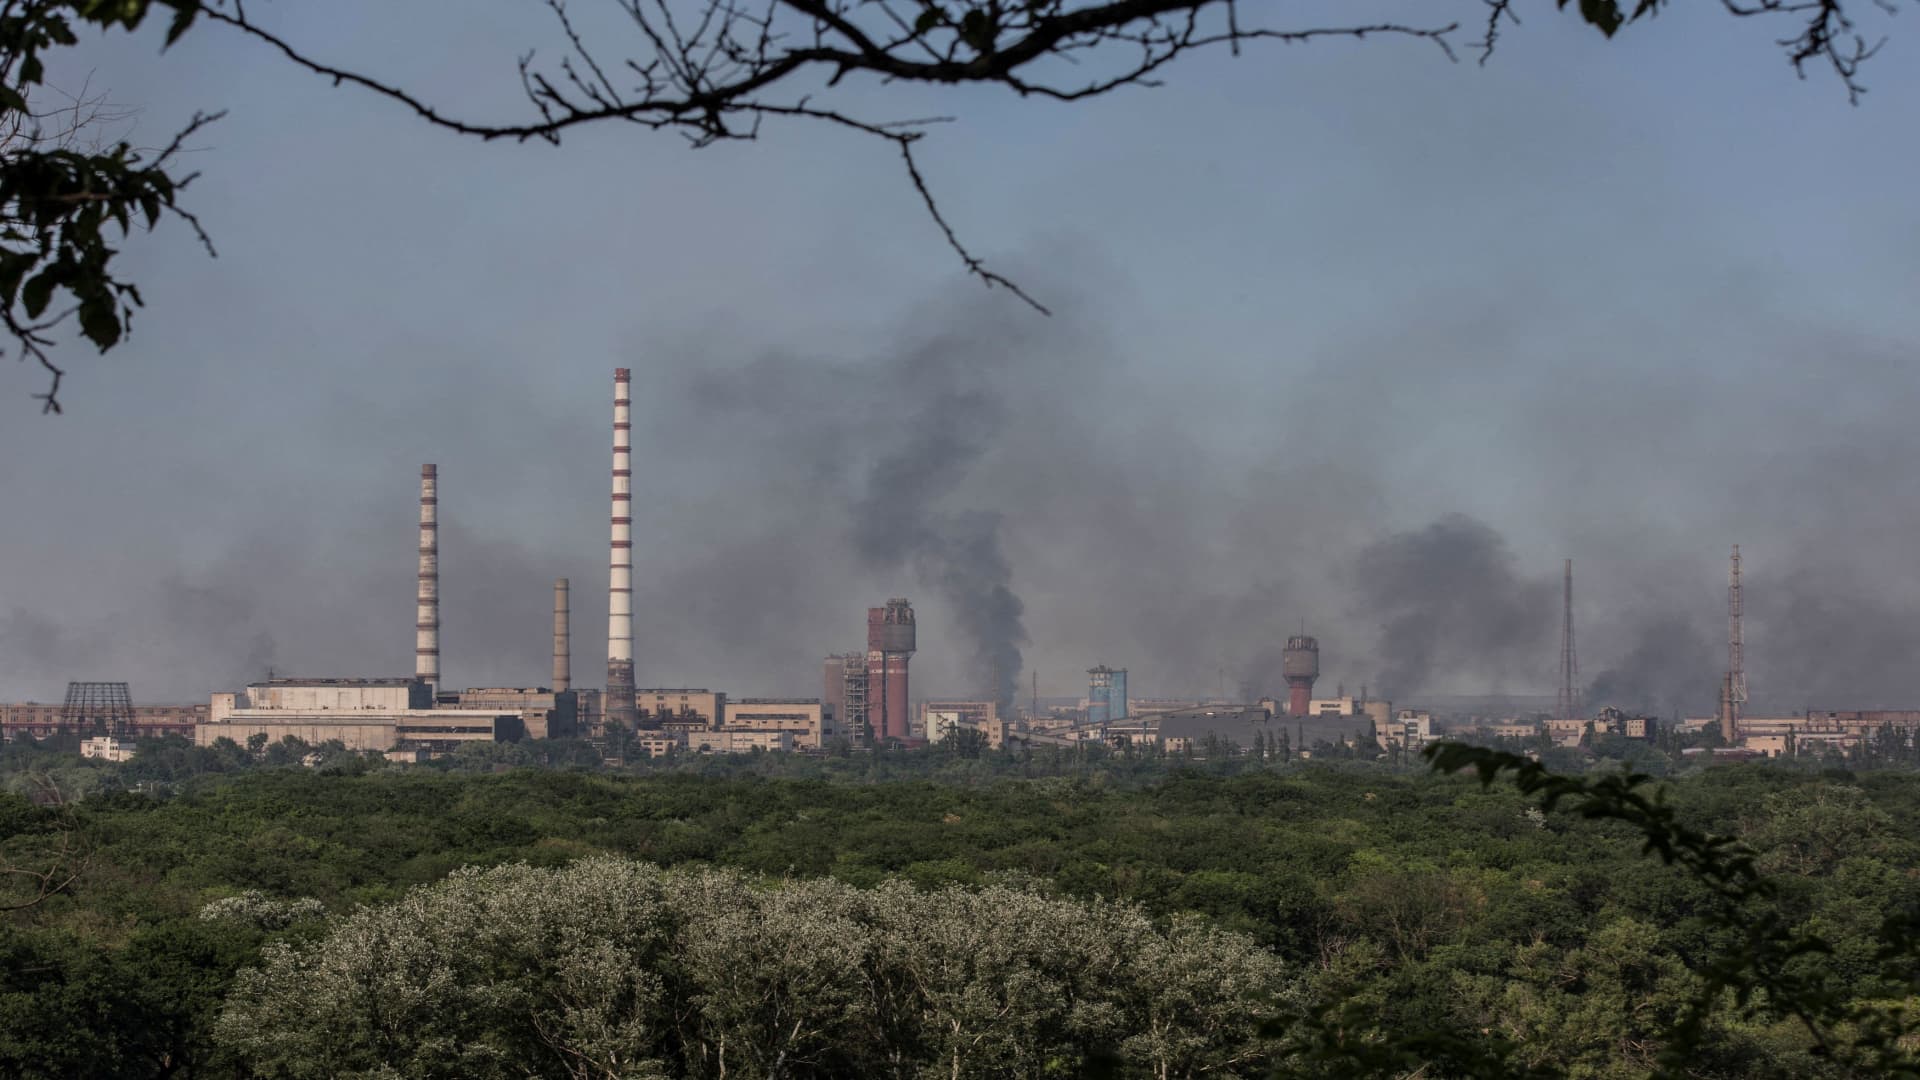 Ukraine says it still controls Sievierodonetsk plant sheltering hundreds of civilians